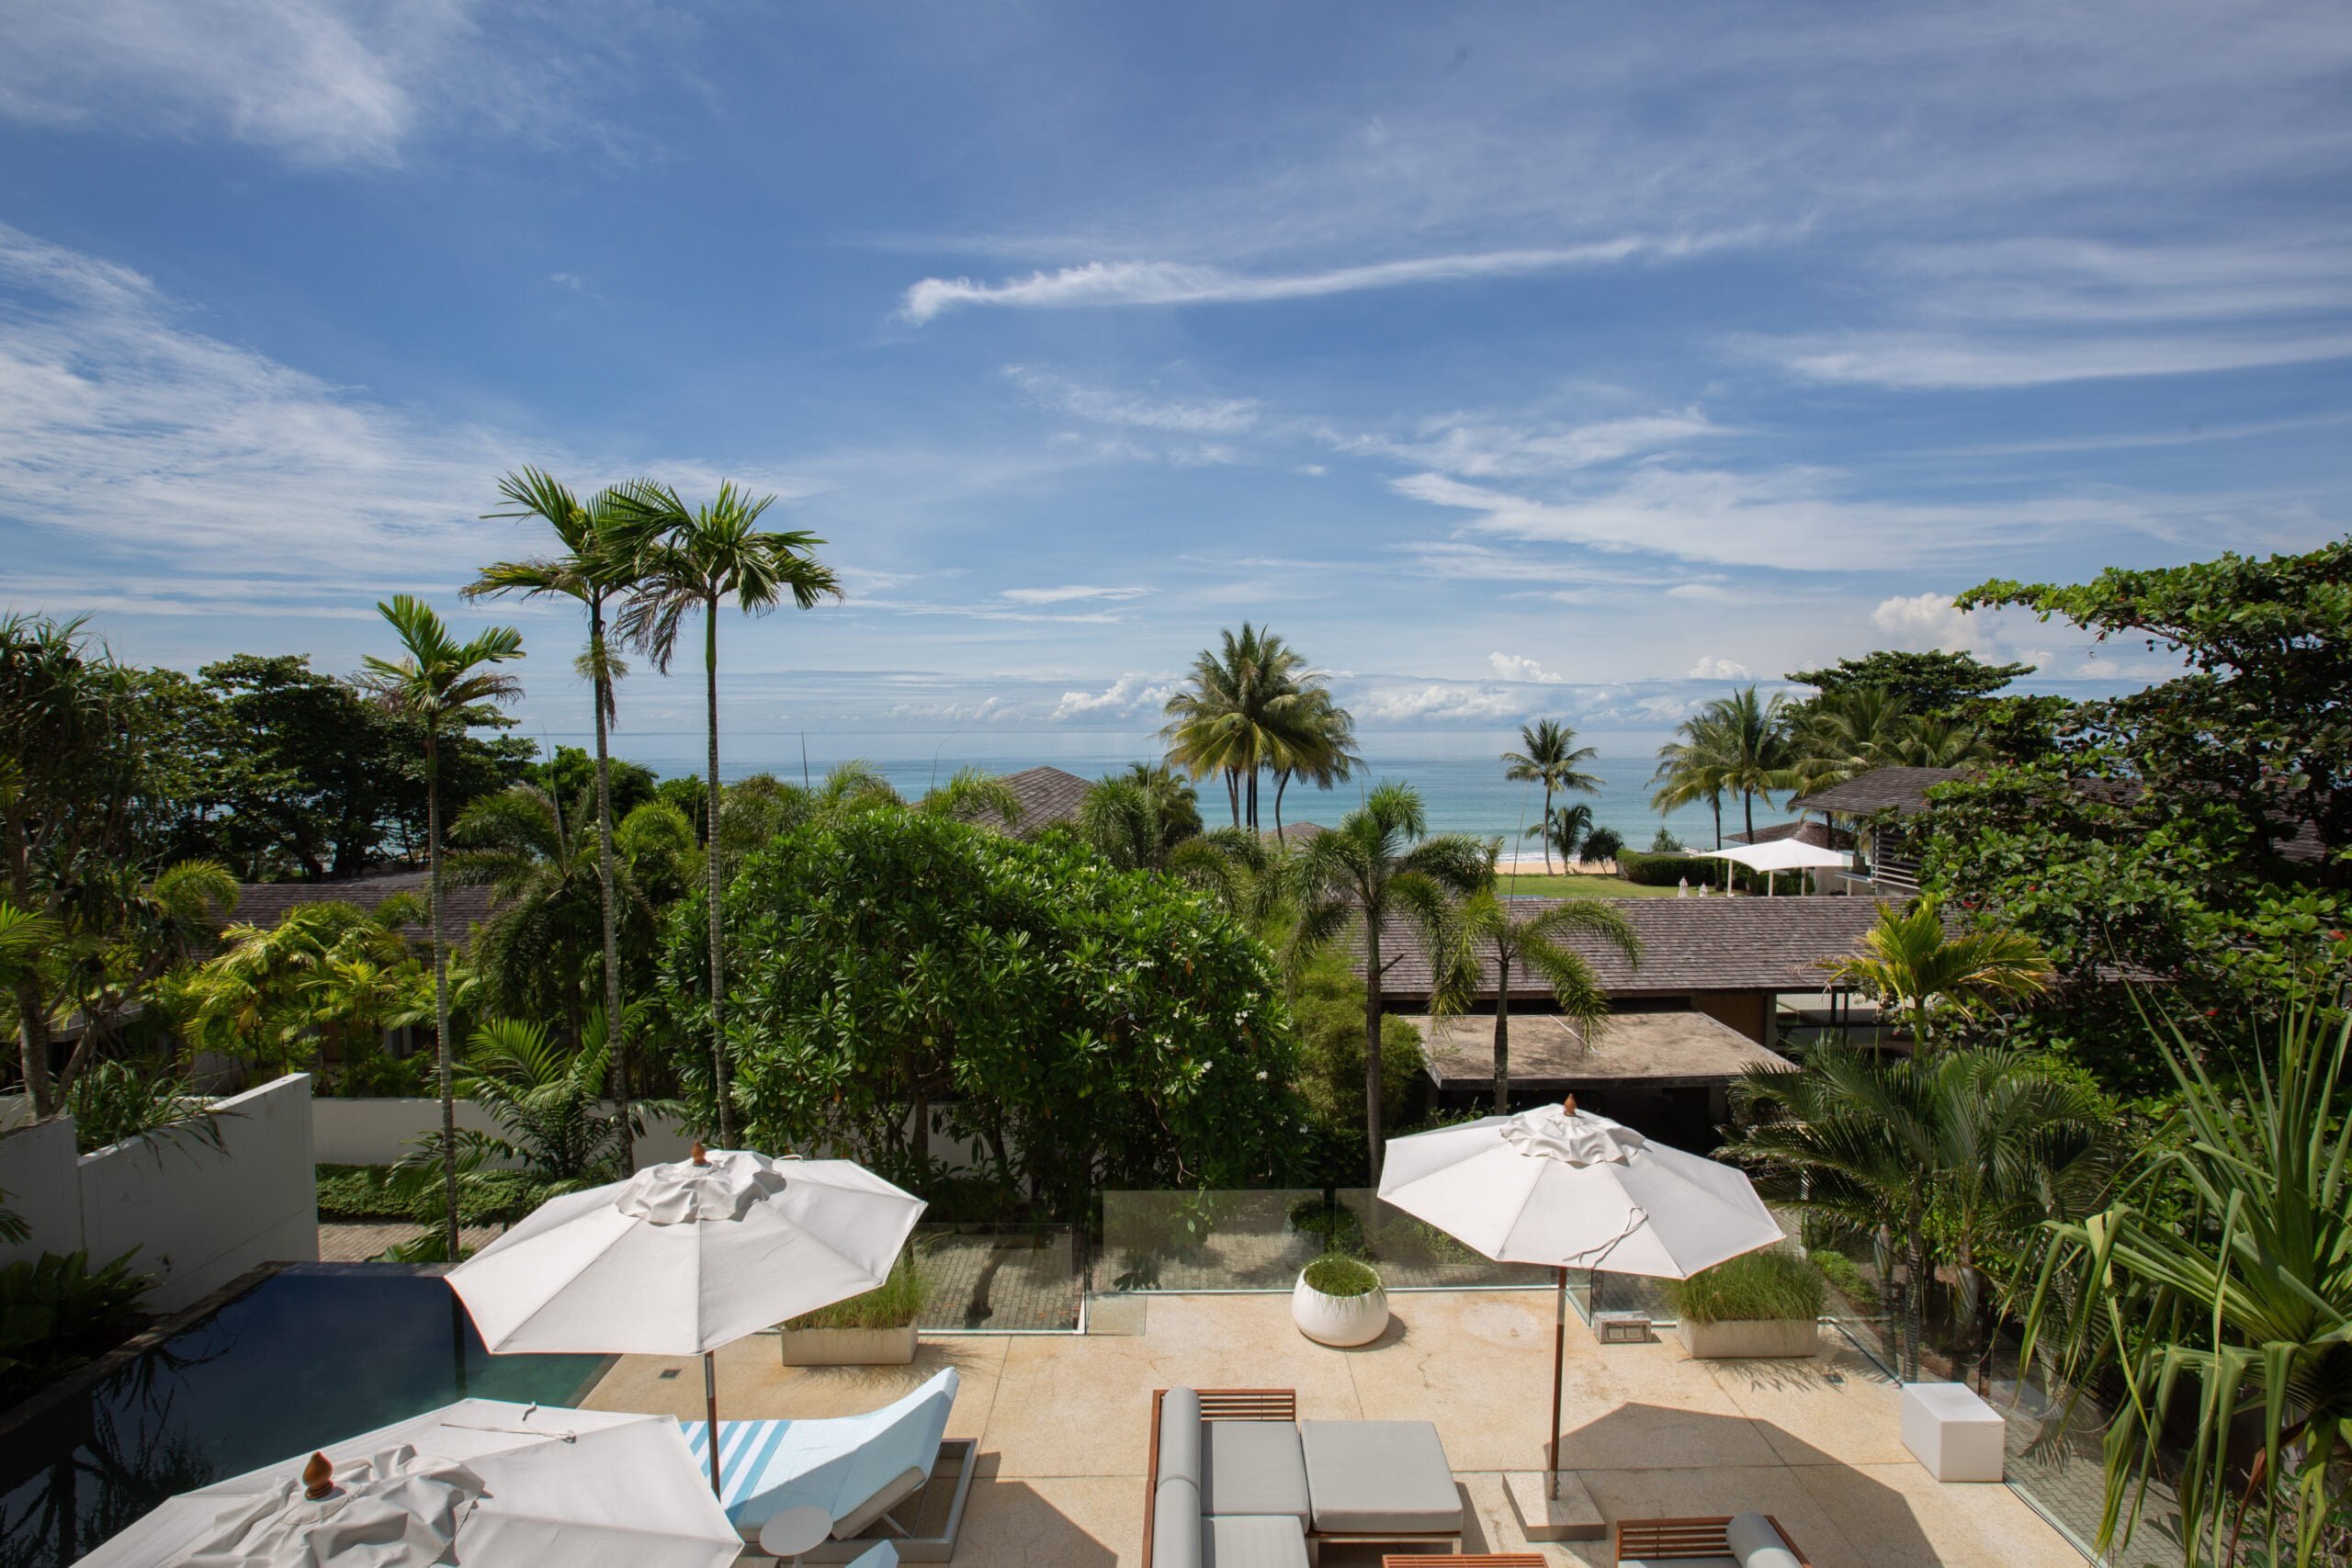 villa aqua, luxury villa located in sava estate, natai beach, phuket, thailand